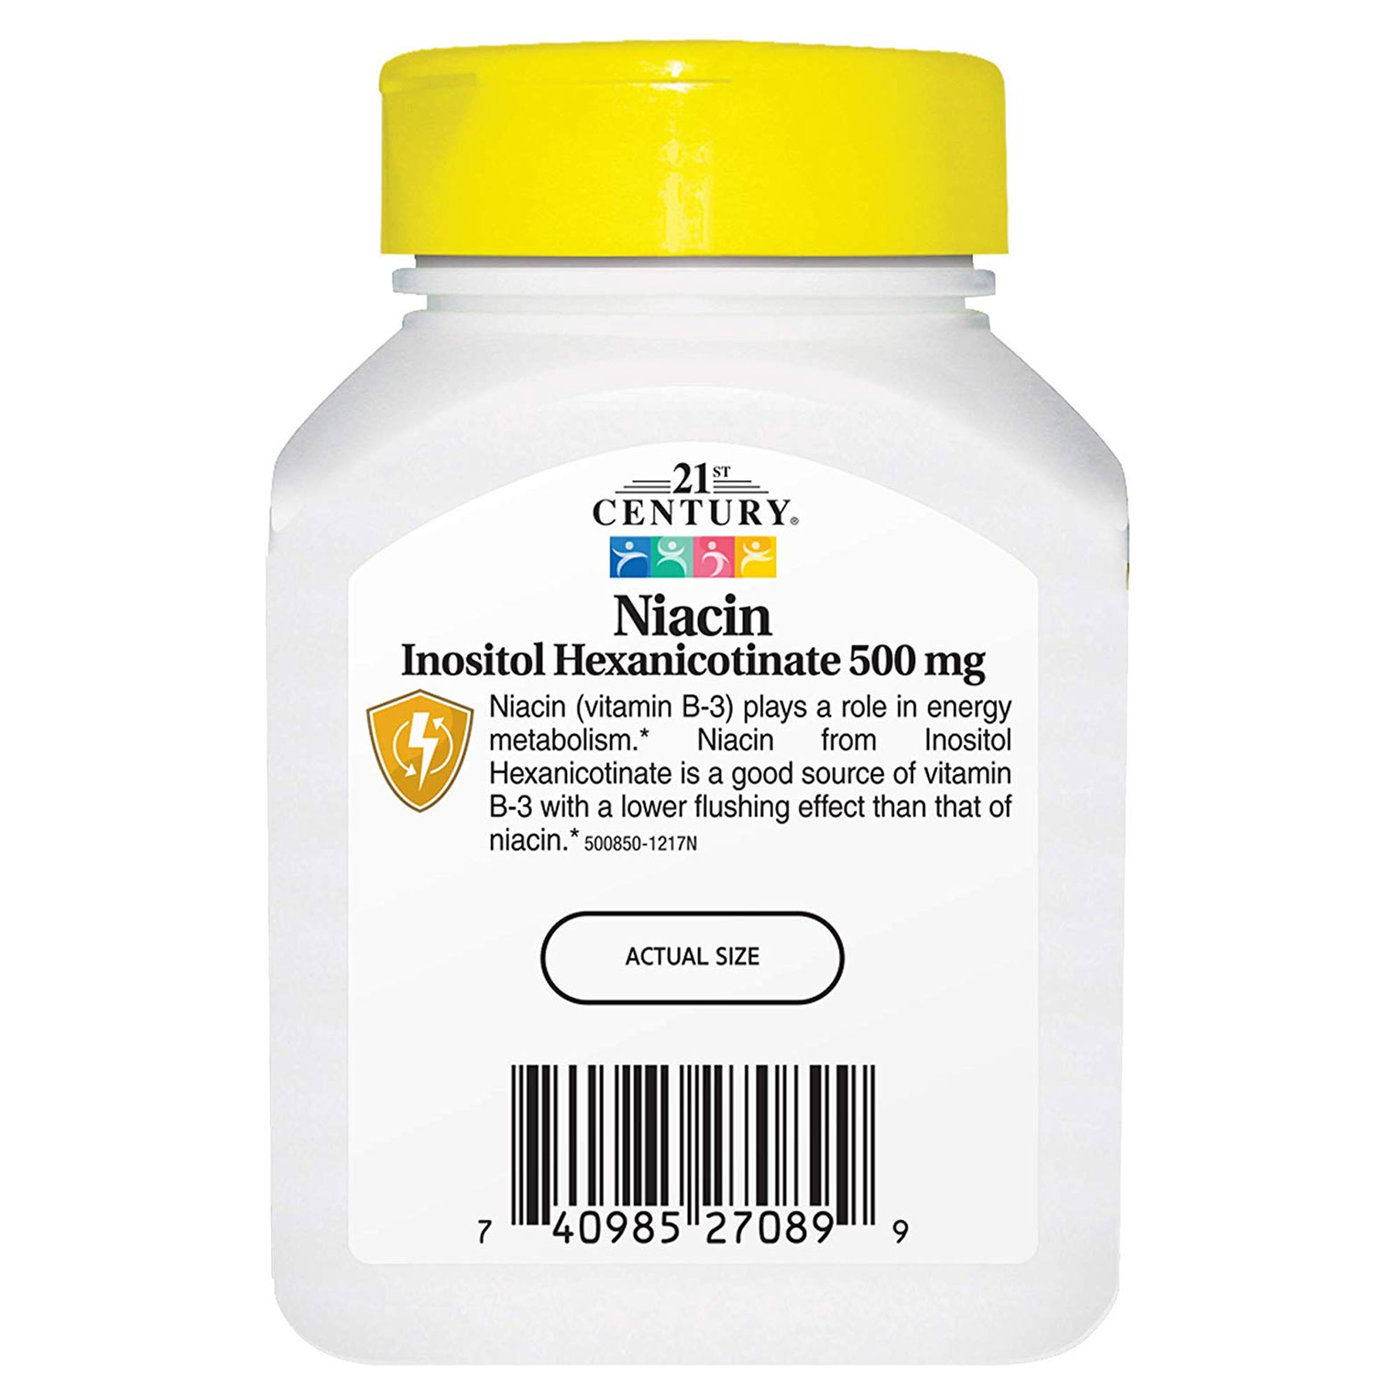 21st Century Niacina Hexanicotinato de inositol 500 mg